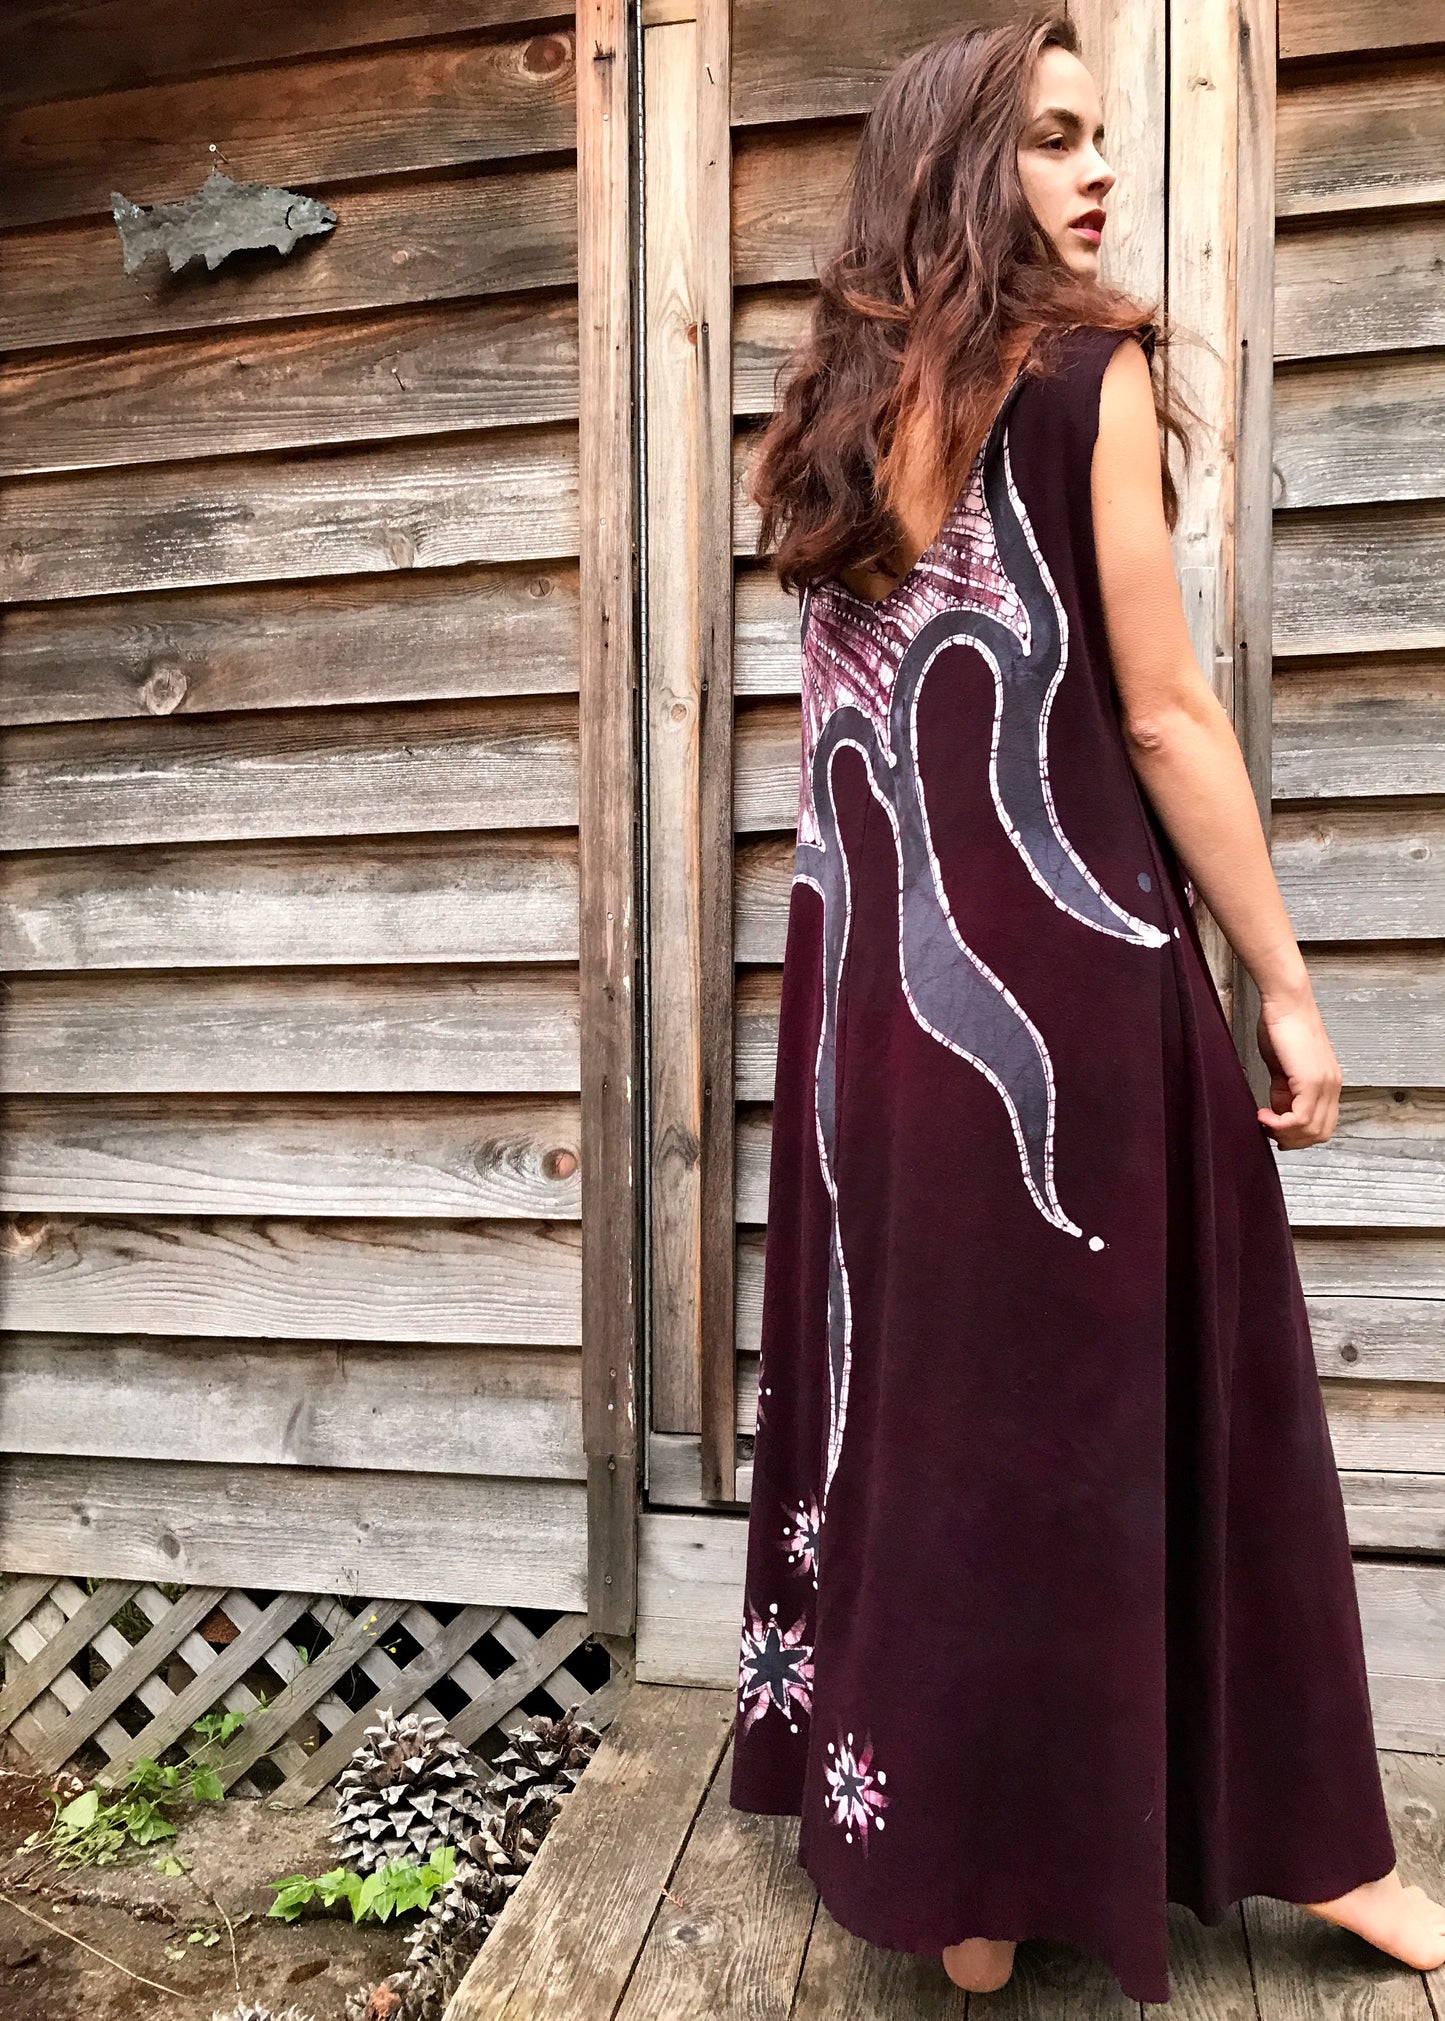 Tell The Stars How Much I Love Them - Batikwalla Dress in Organic Cotton - Size XL